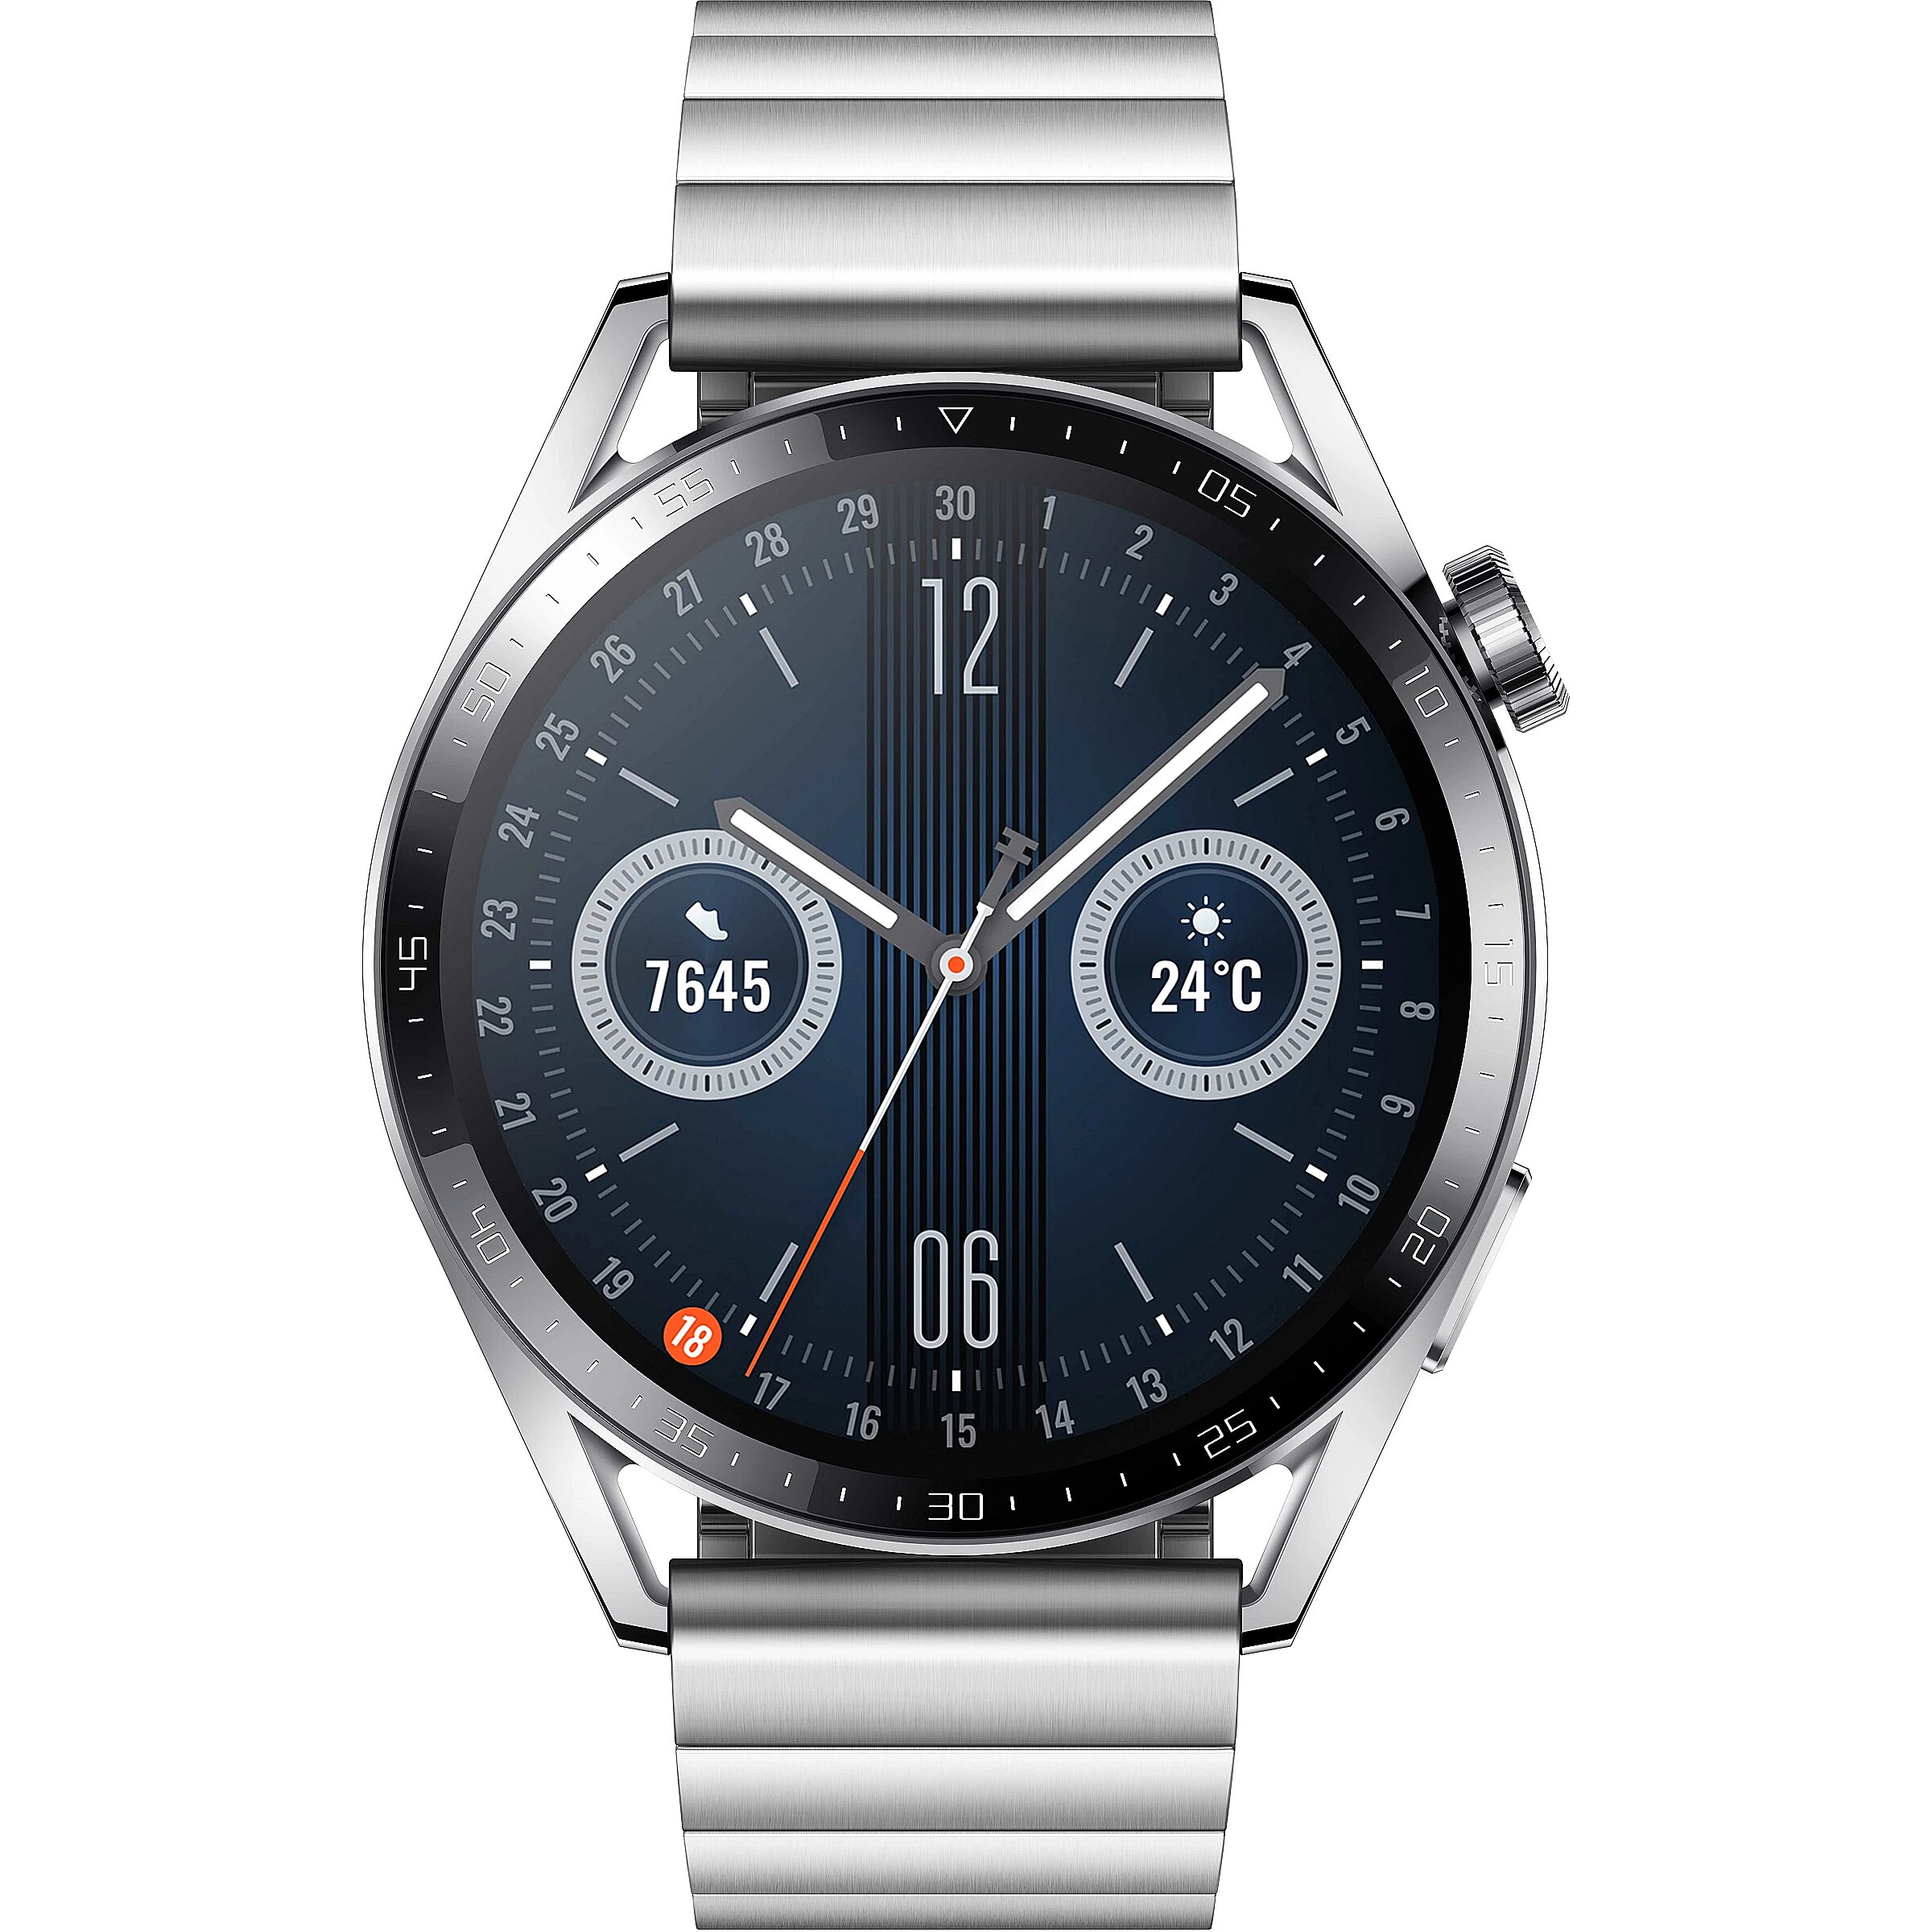 Huawei watch gt 3 белый. Huawei watch gt3 Jupiter. Часы Хуавей gt3. Смарт-часы Huawei gt 3. Huawei gt3 46mm.